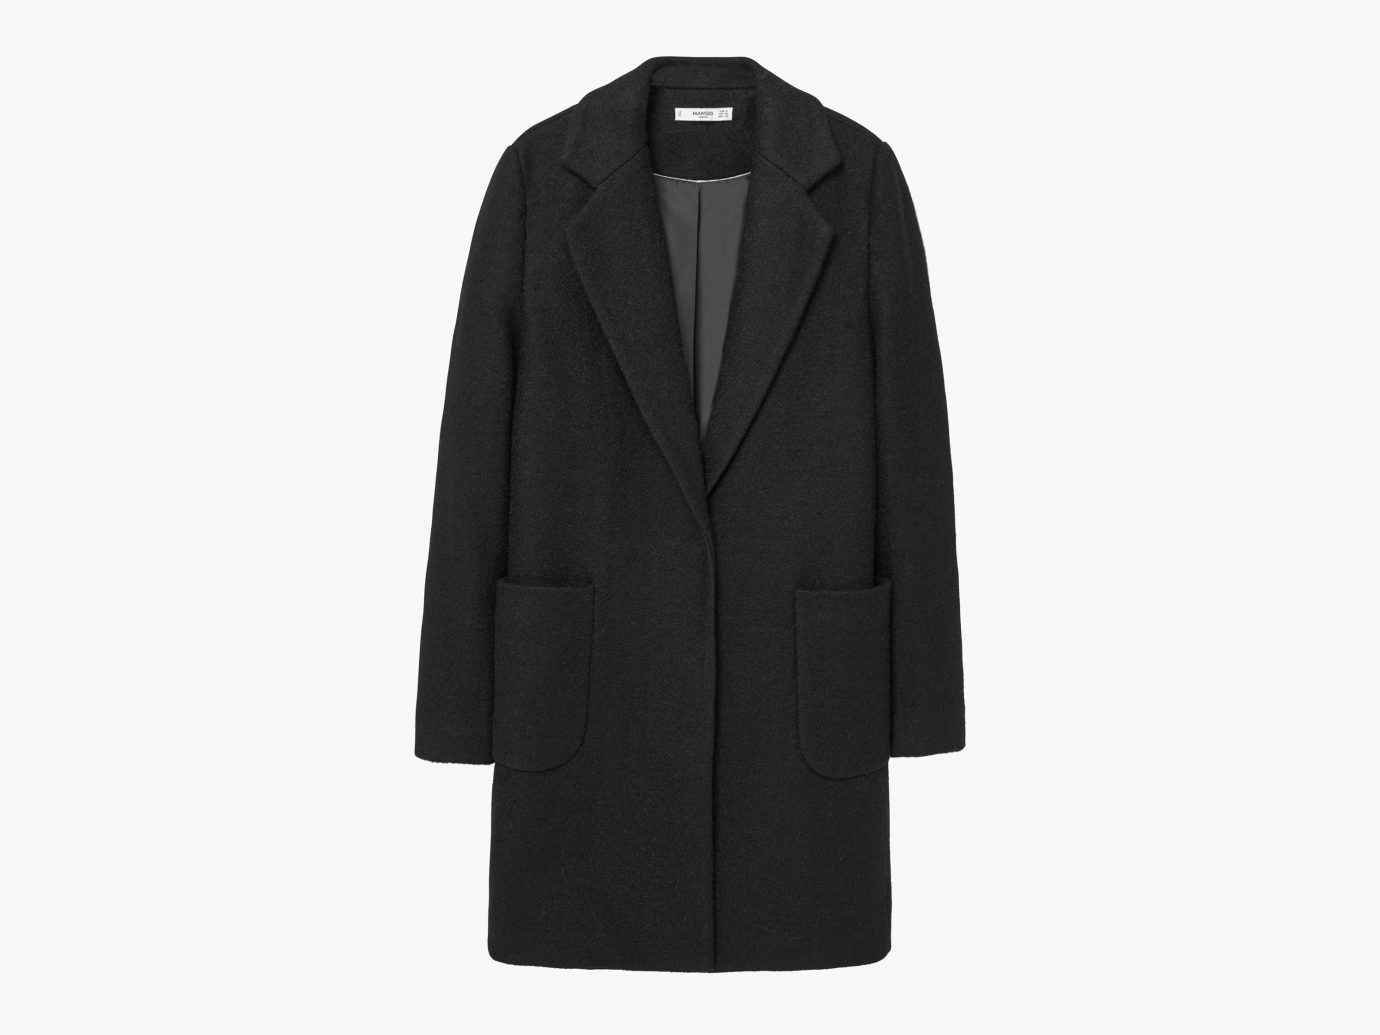 Style + Design suit clothing coat overcoat outerwear wearing jacket wool woolen formal wear textile posing dressed tan